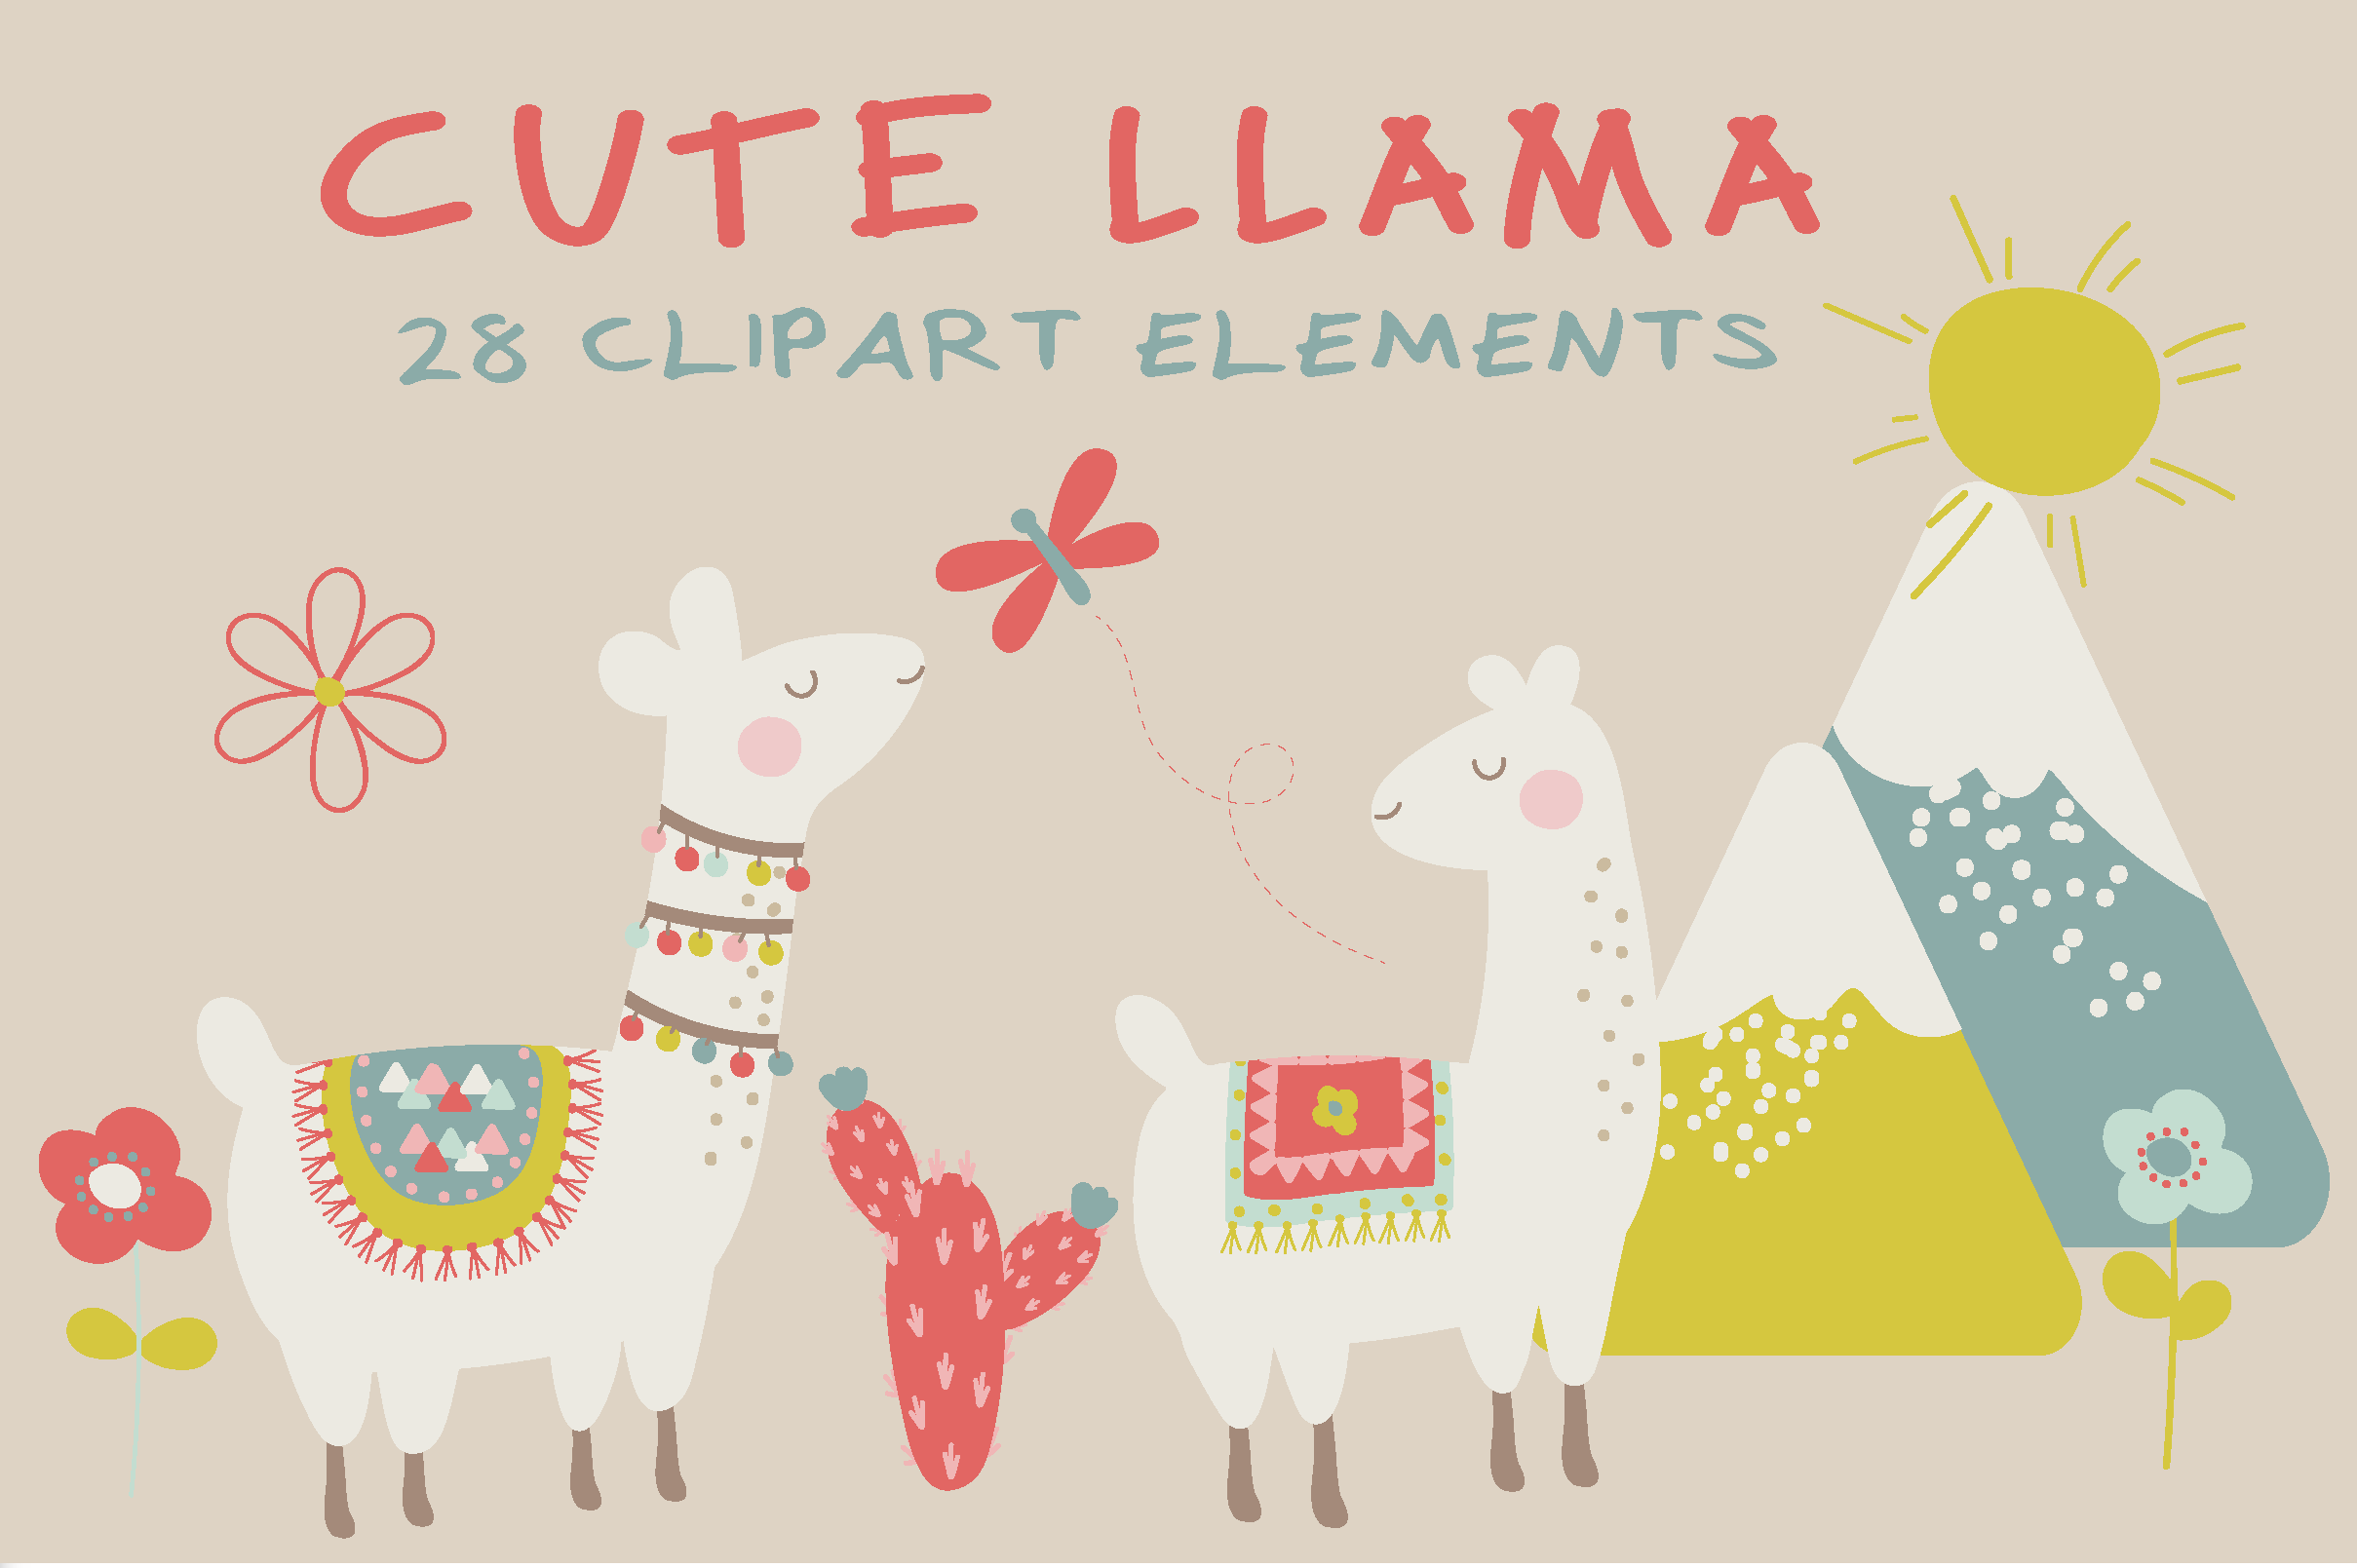 Cute llama clipart ~ Illustrations ~ Creative Market